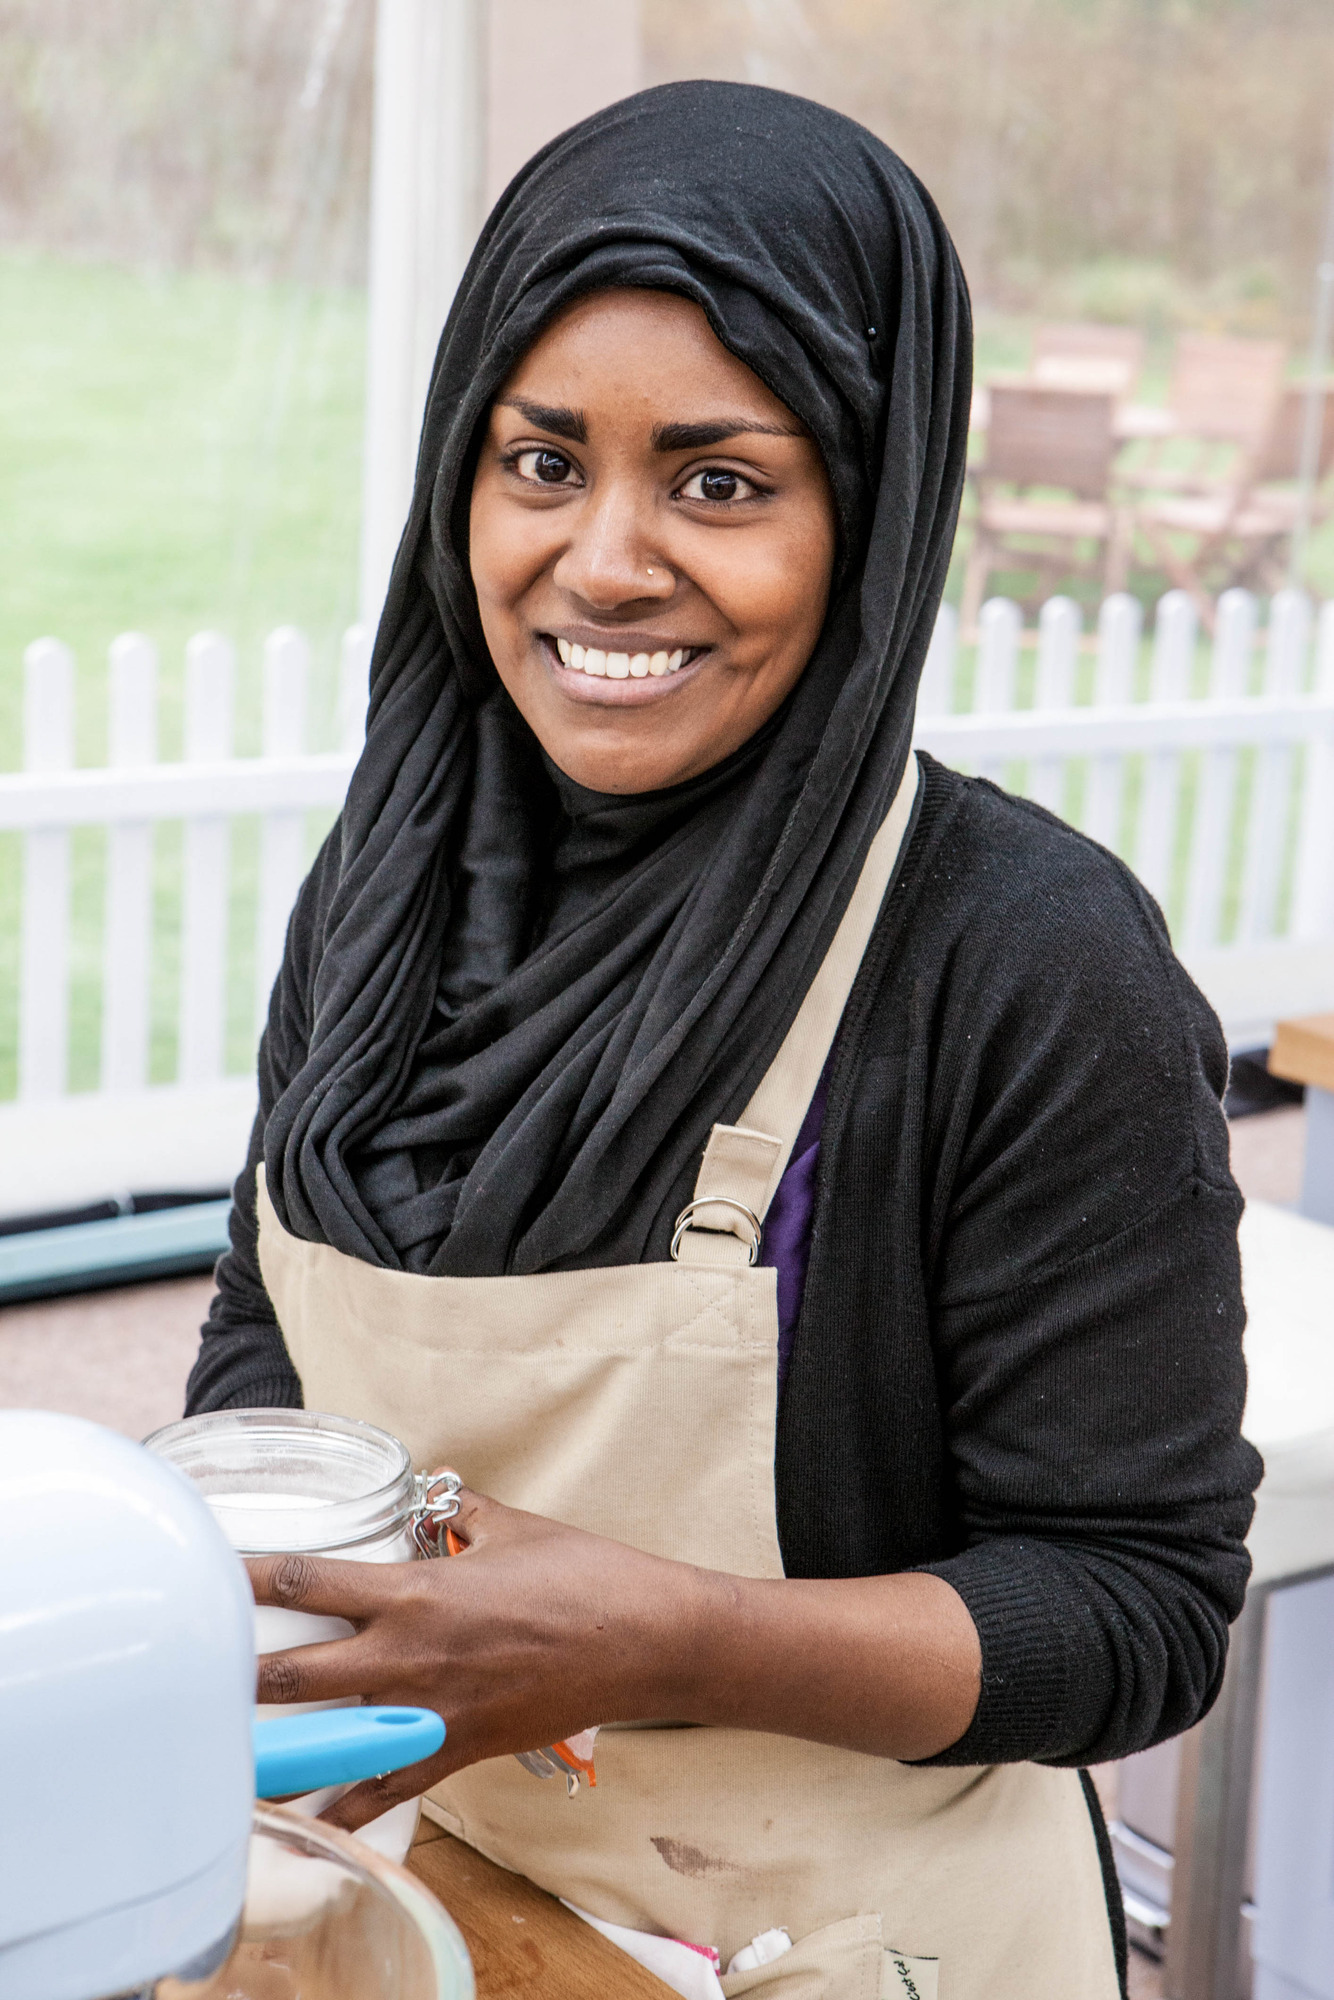 Great British Bake-Off star Nadiya Hussain's home placed 